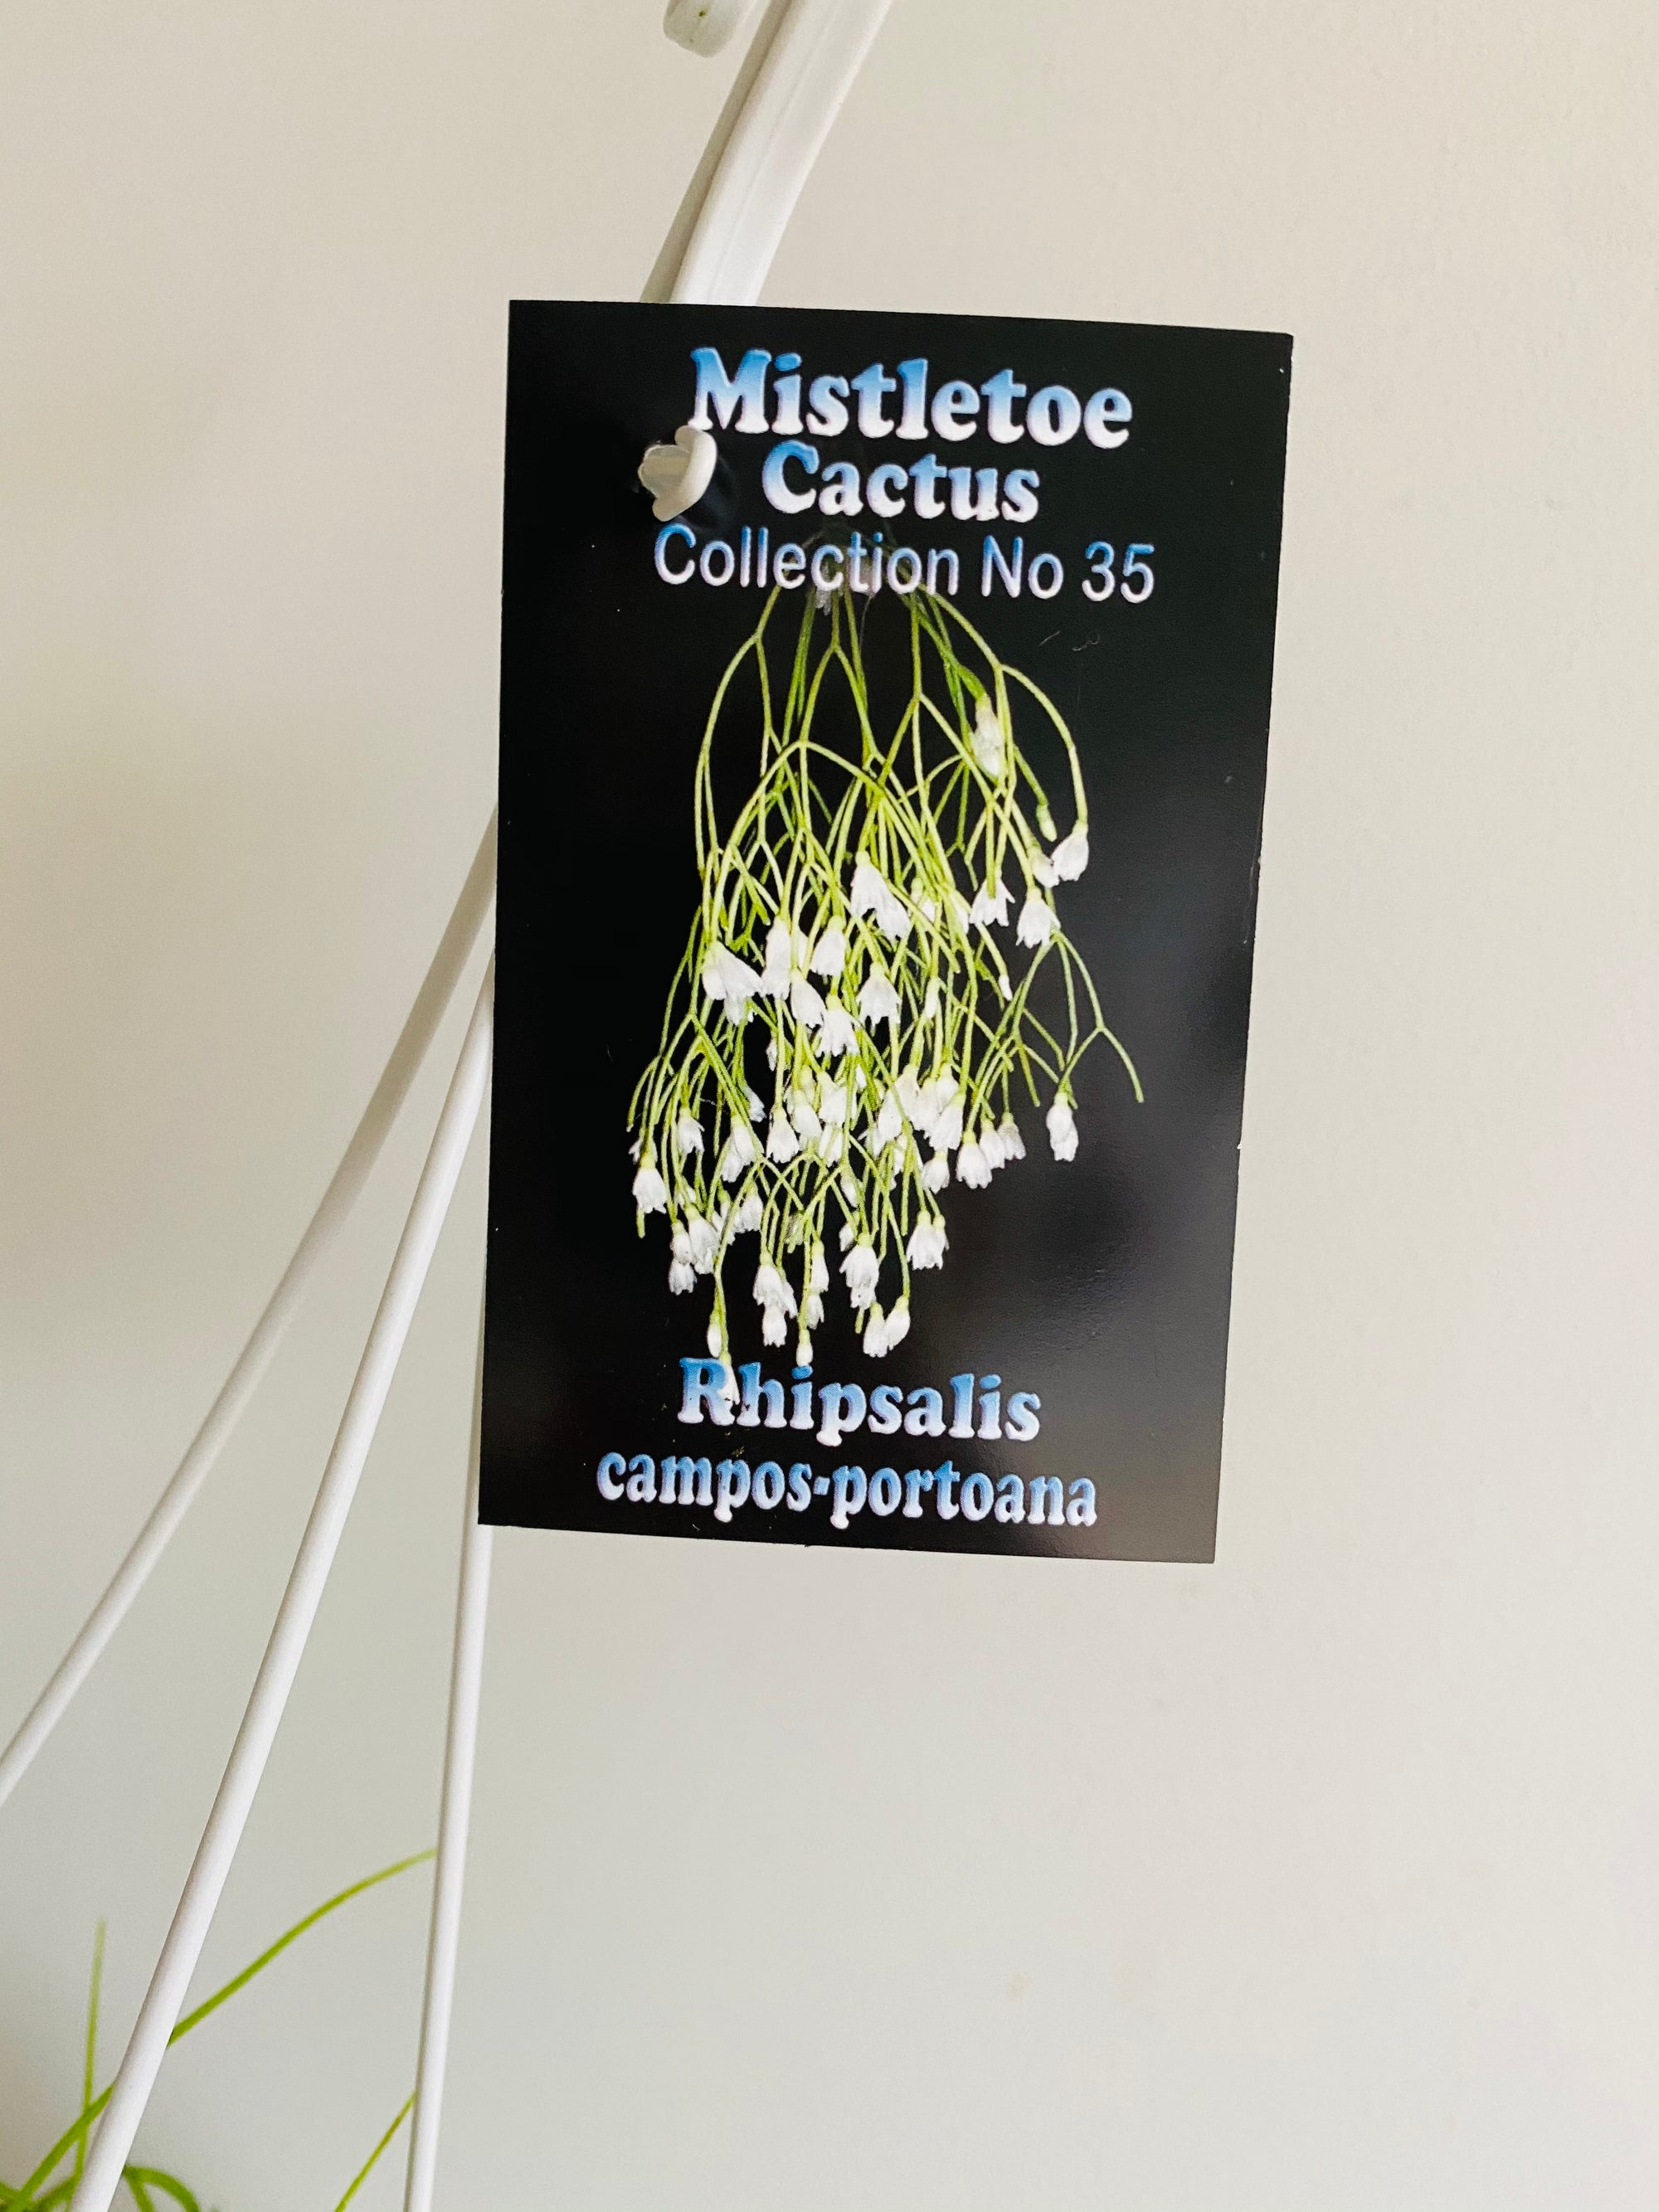 Rhipsalis Campos Portoana - Mistletoe Cactus Collection No. 35